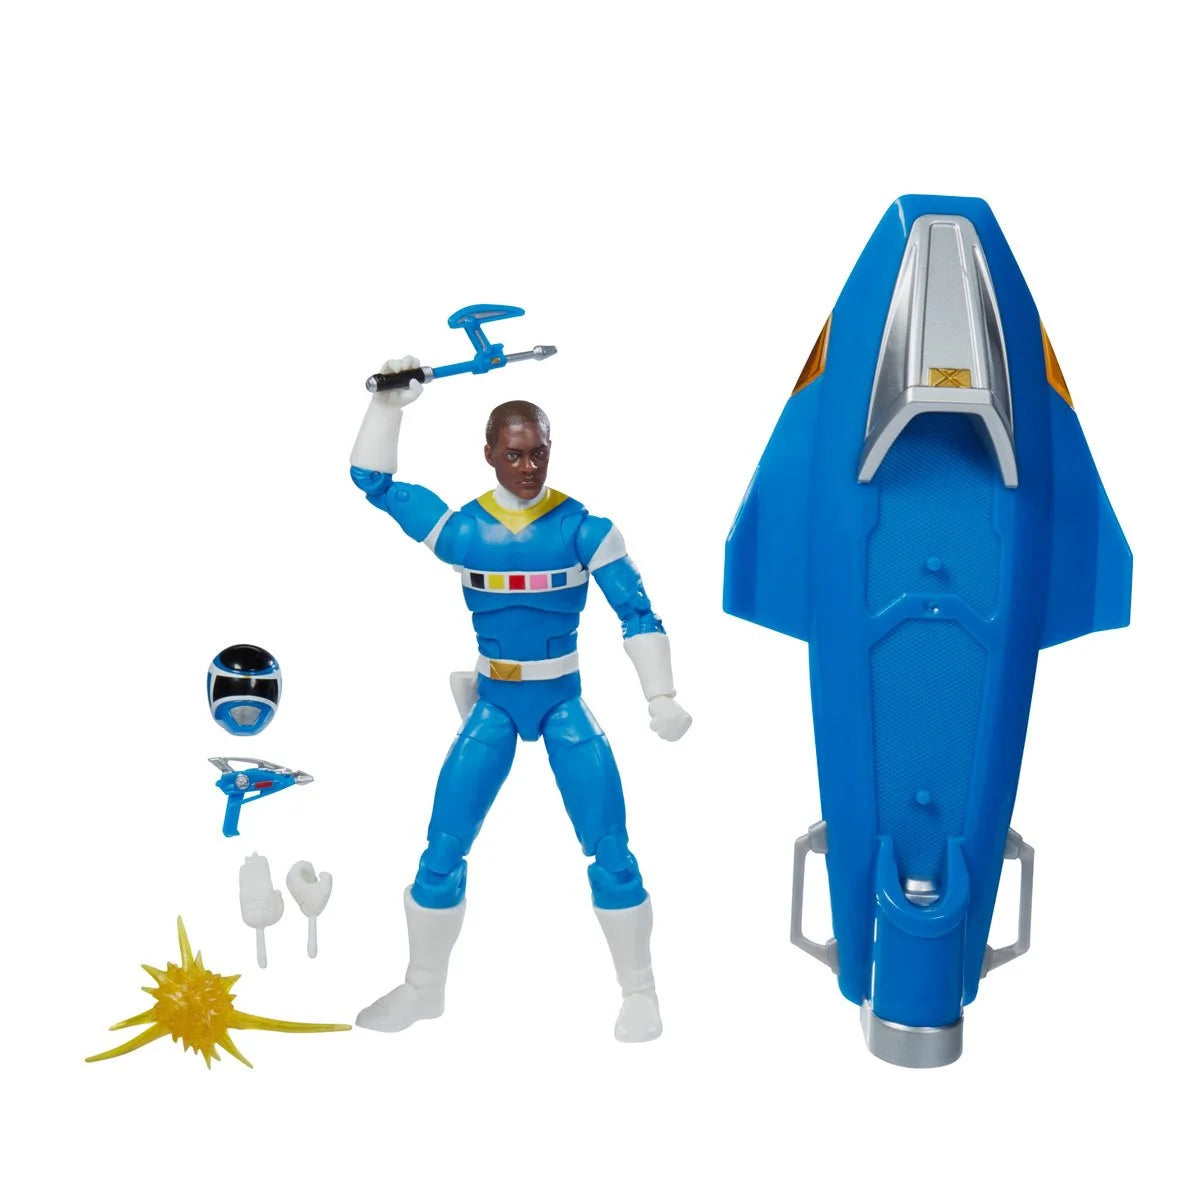 In Space Blue Ranger